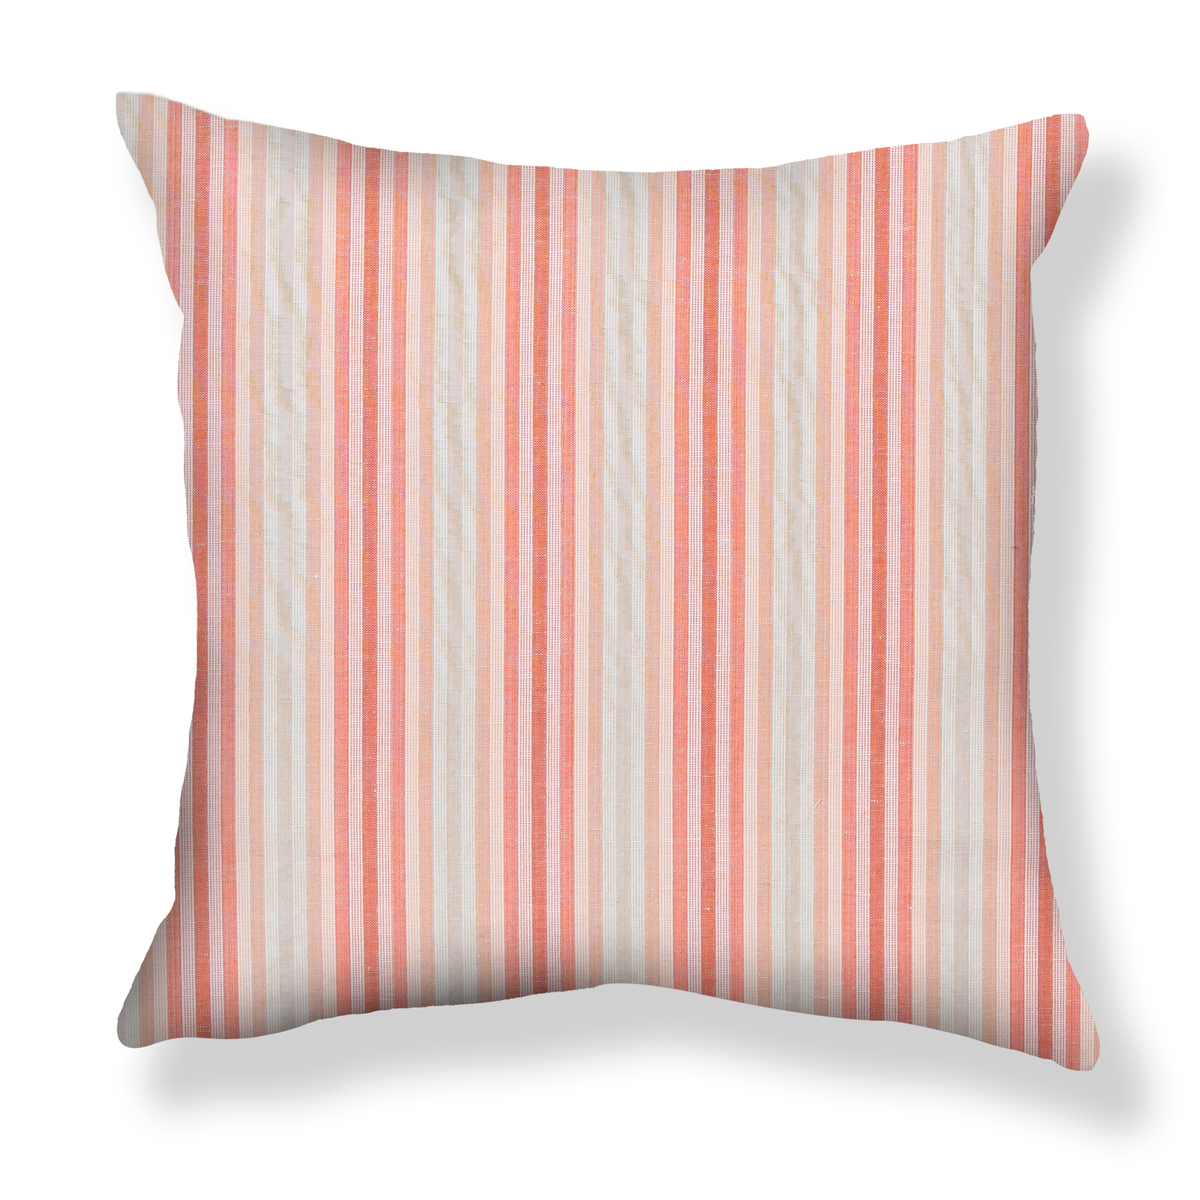 Ombré Stripe Pillow in Tangerine